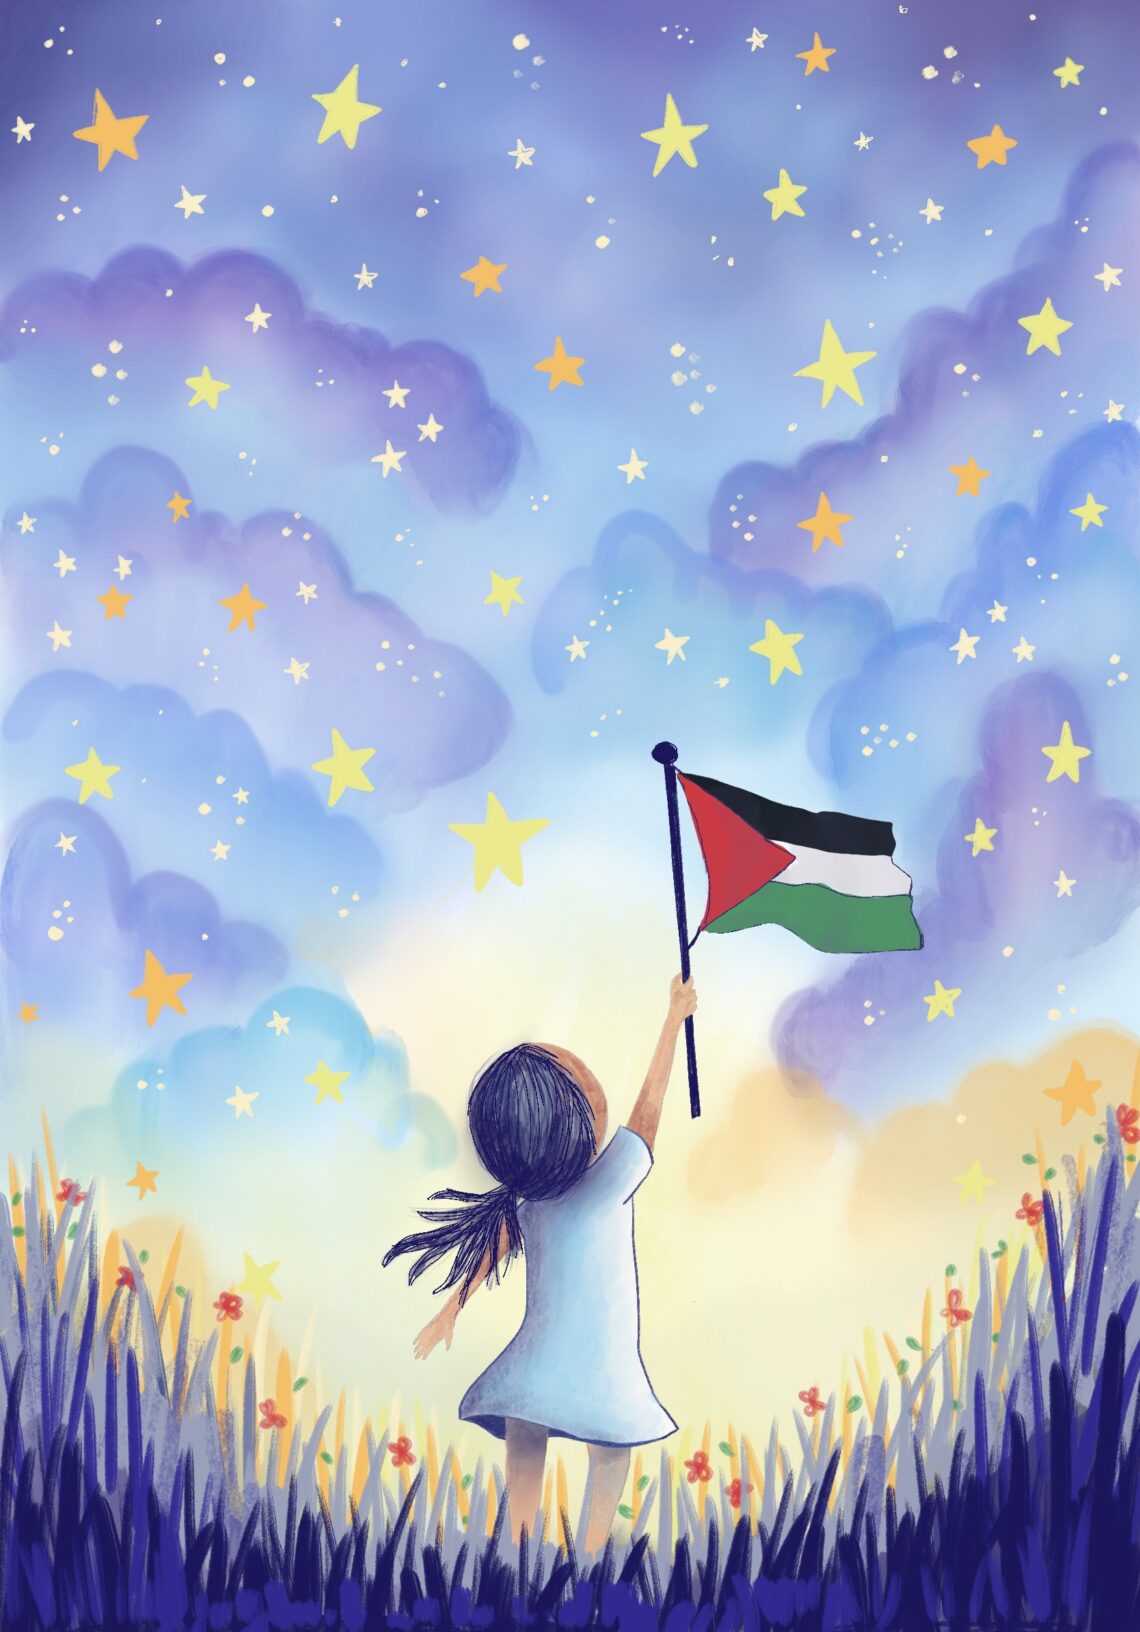 Free Palestine digital artwork, girl holding Palestinian flag